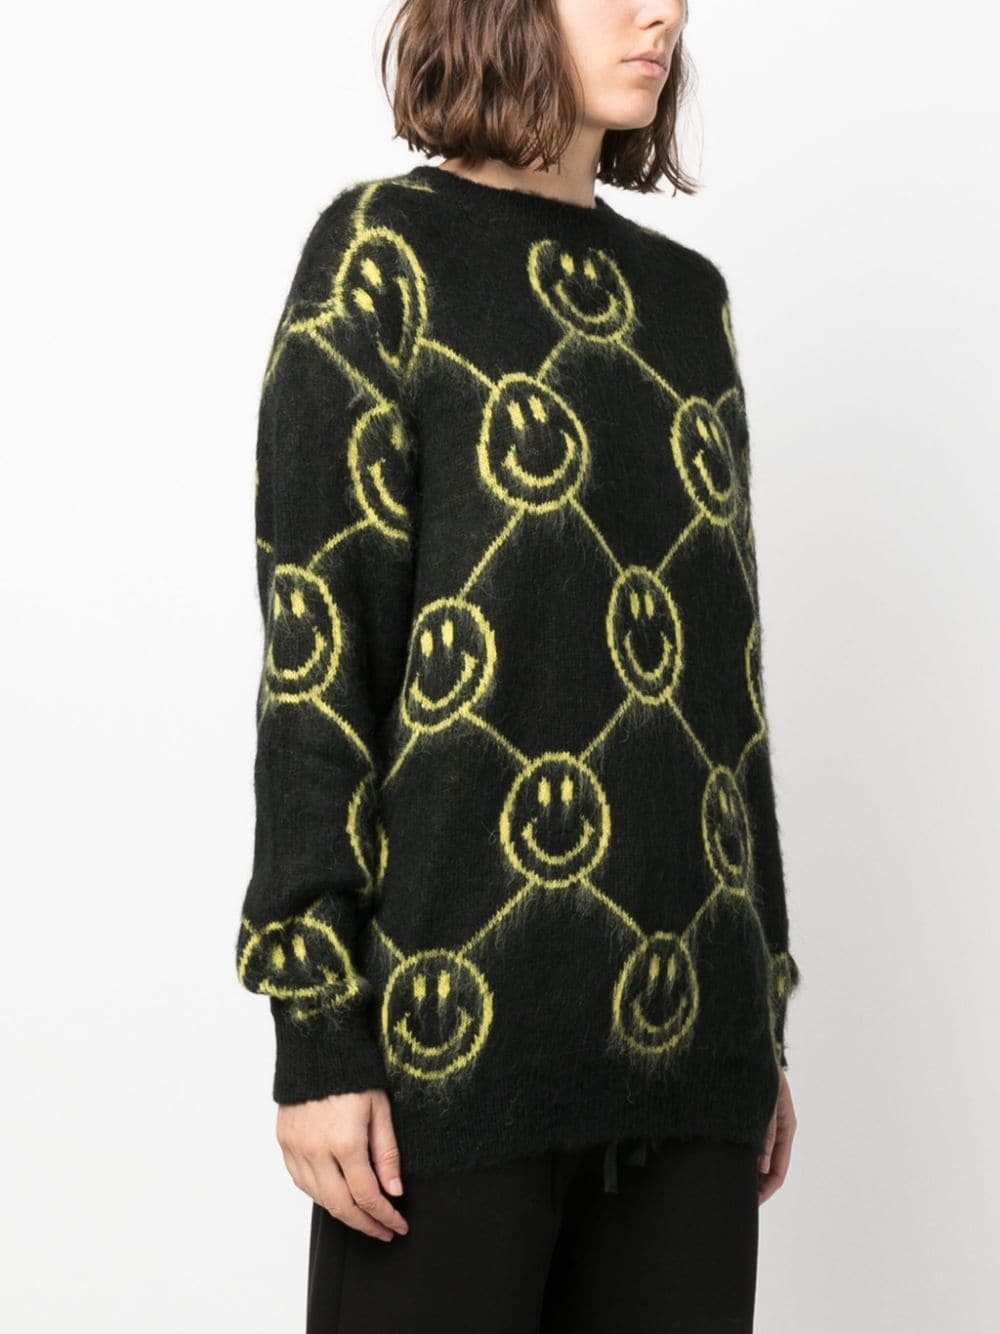 smiley-face intarsia-knit jumper - 3